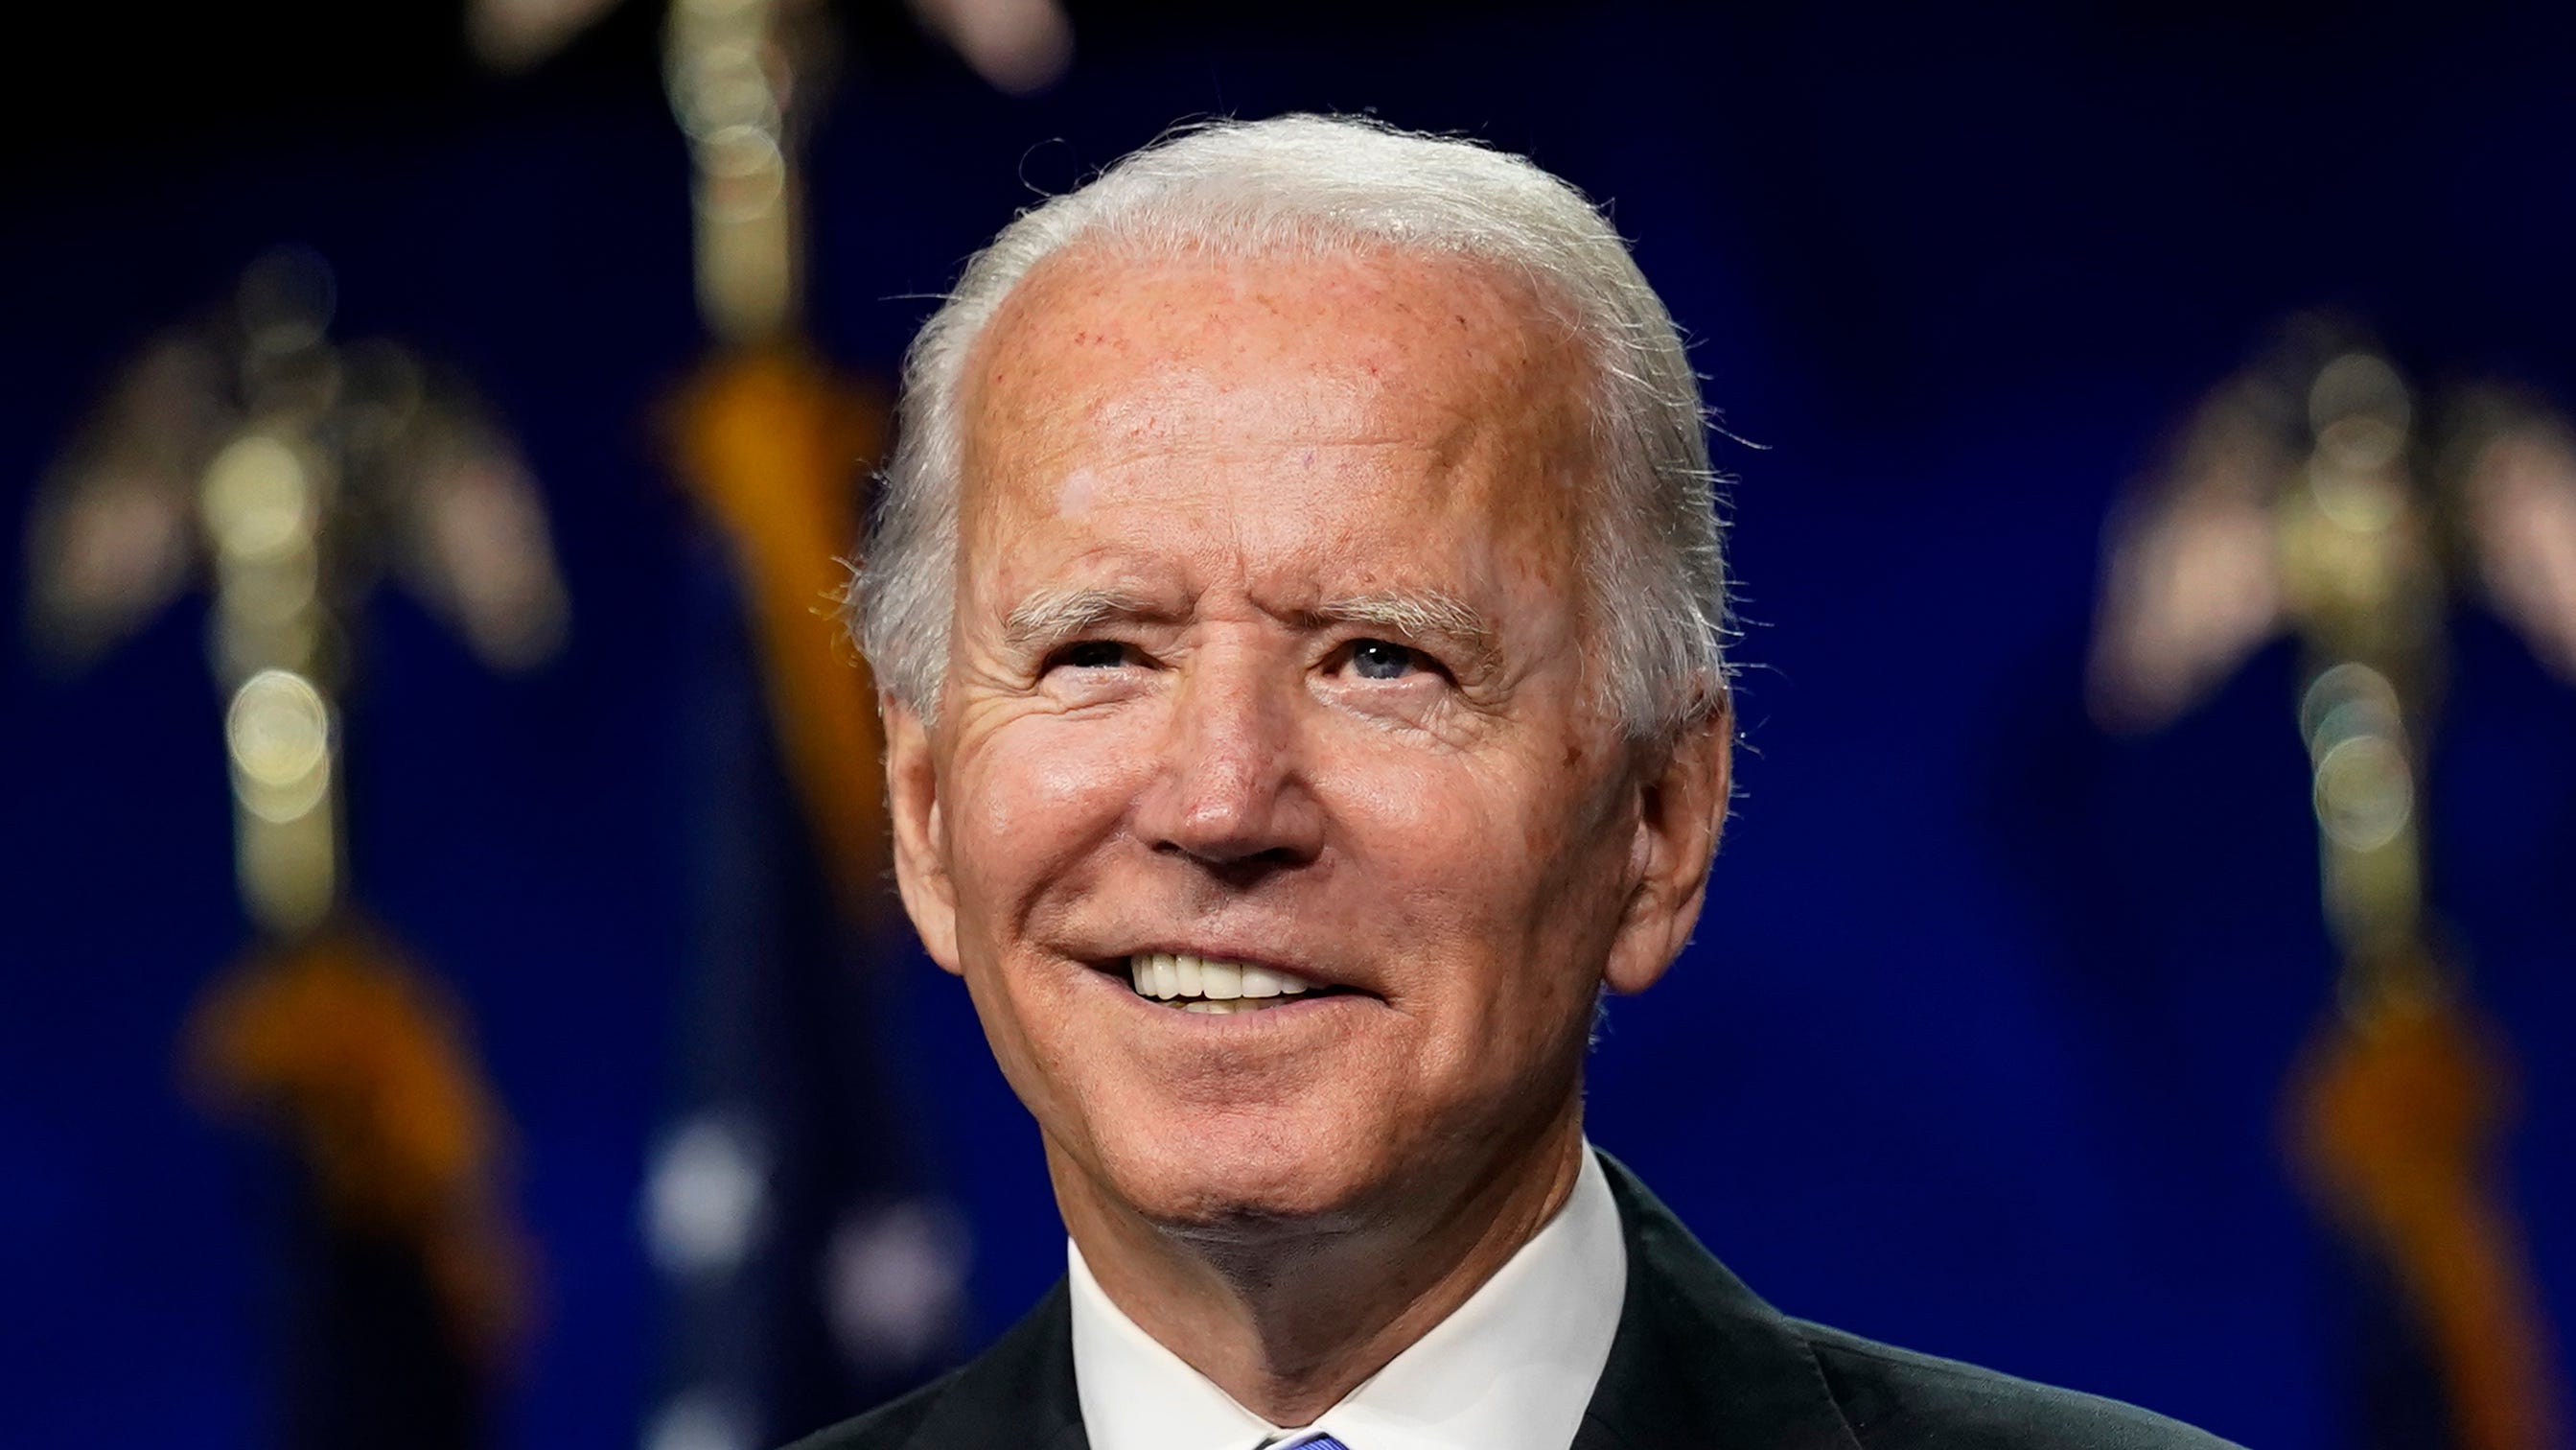 Joe Biden To Visit Kenosha On Thursday In First Trip To Wisconsin